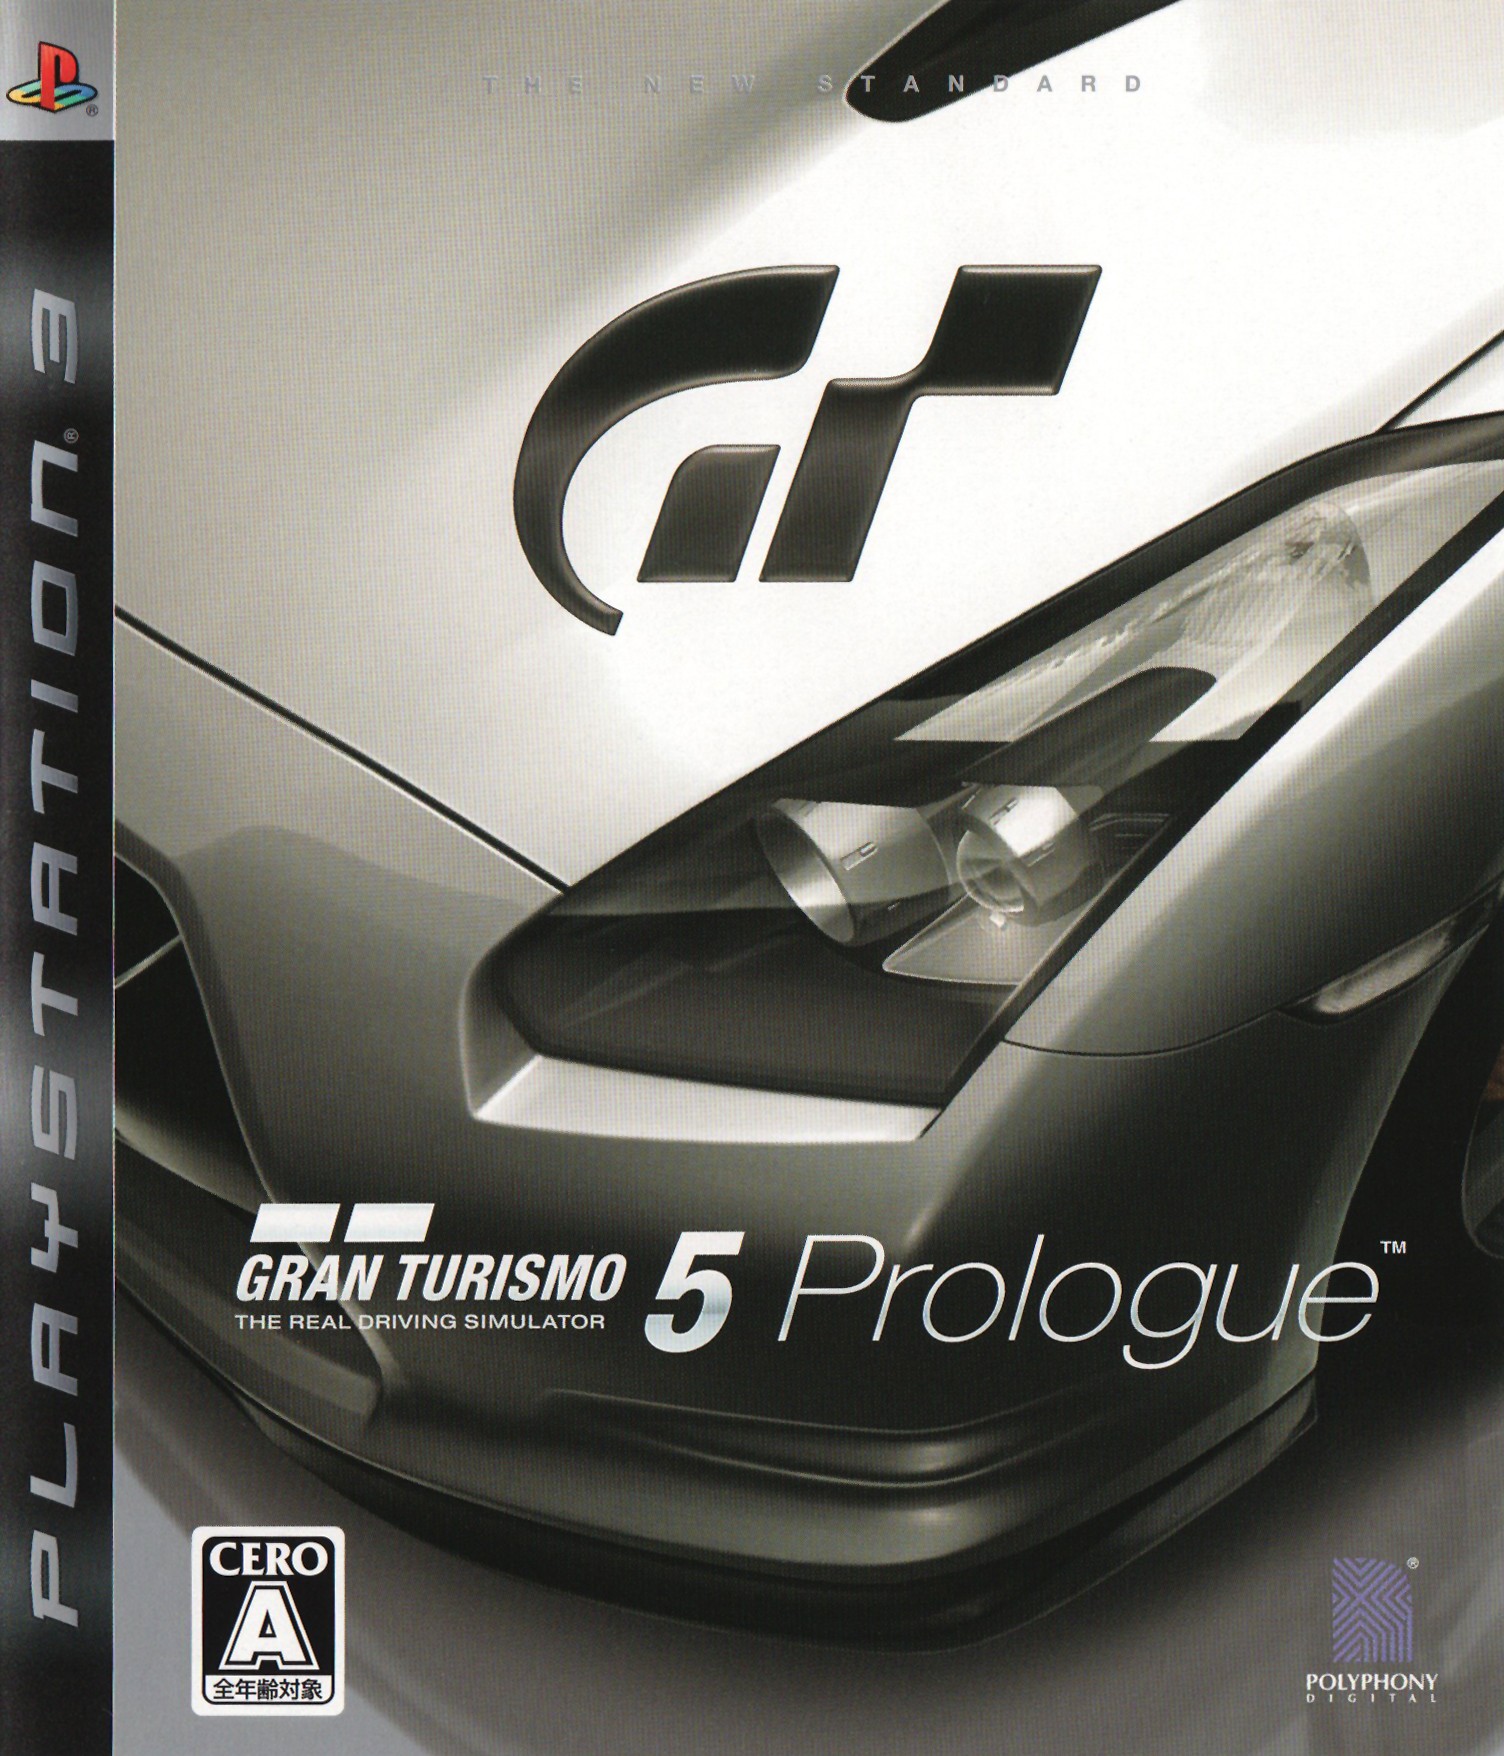 'Gran Turismo 5: Prologue'